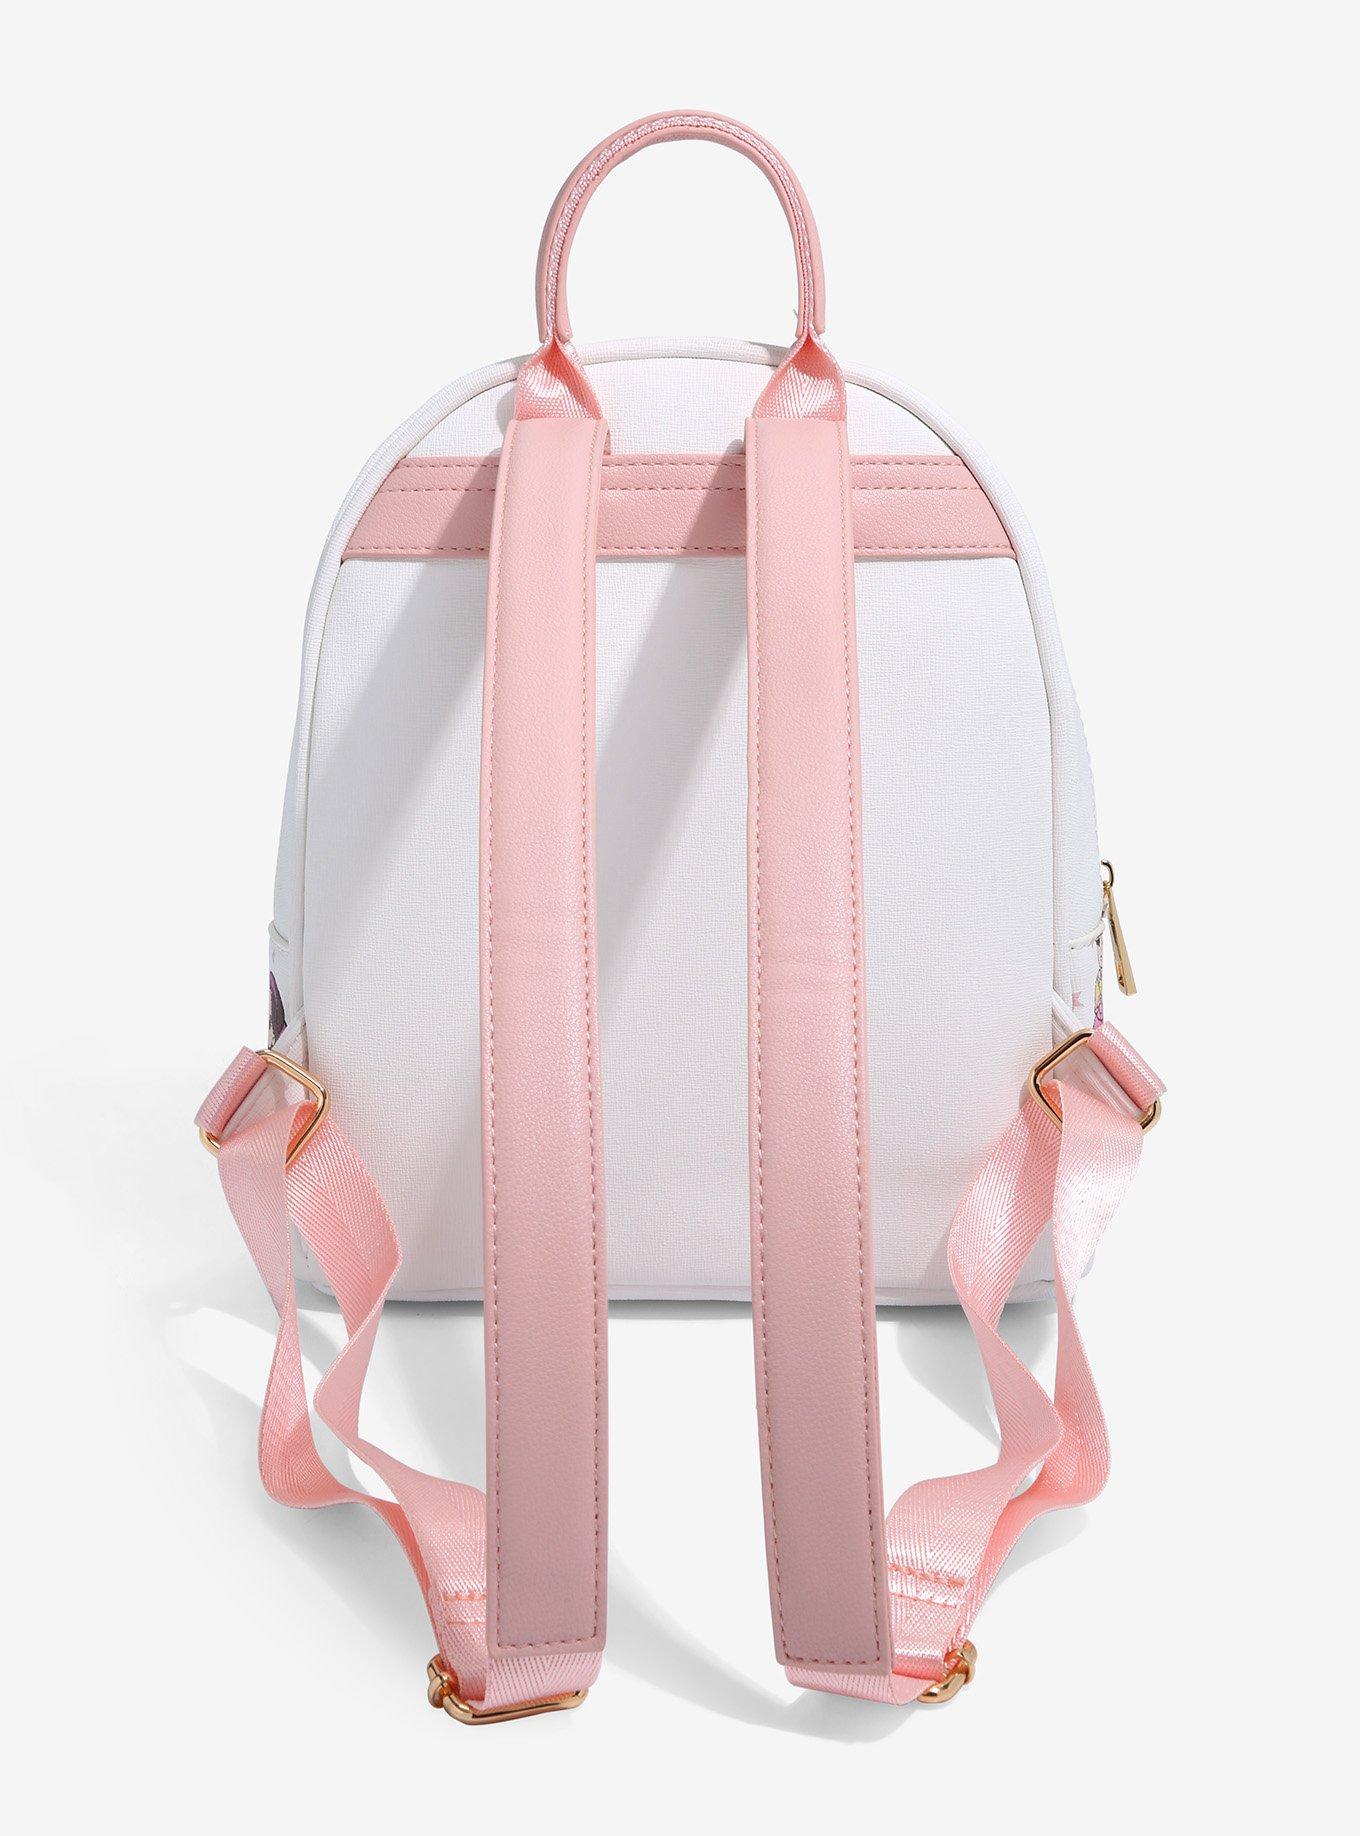 Siesta backpack spotted 🔥📷 @ccbernstein ♥️ »